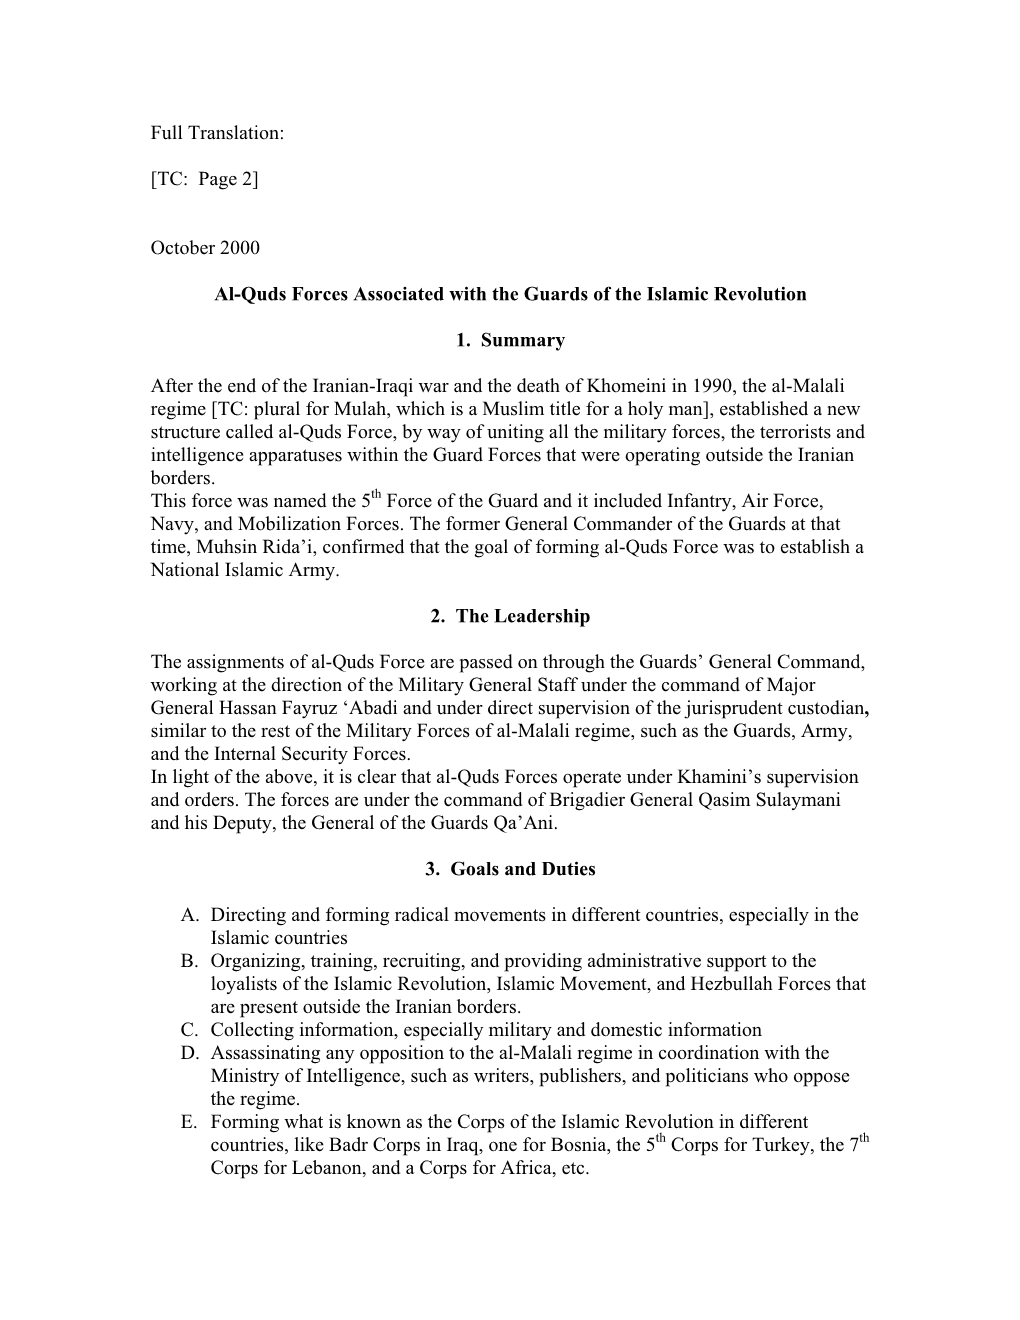 Full Translation: [TC: Page 2] October 2000 Al-Quds Forces Associated